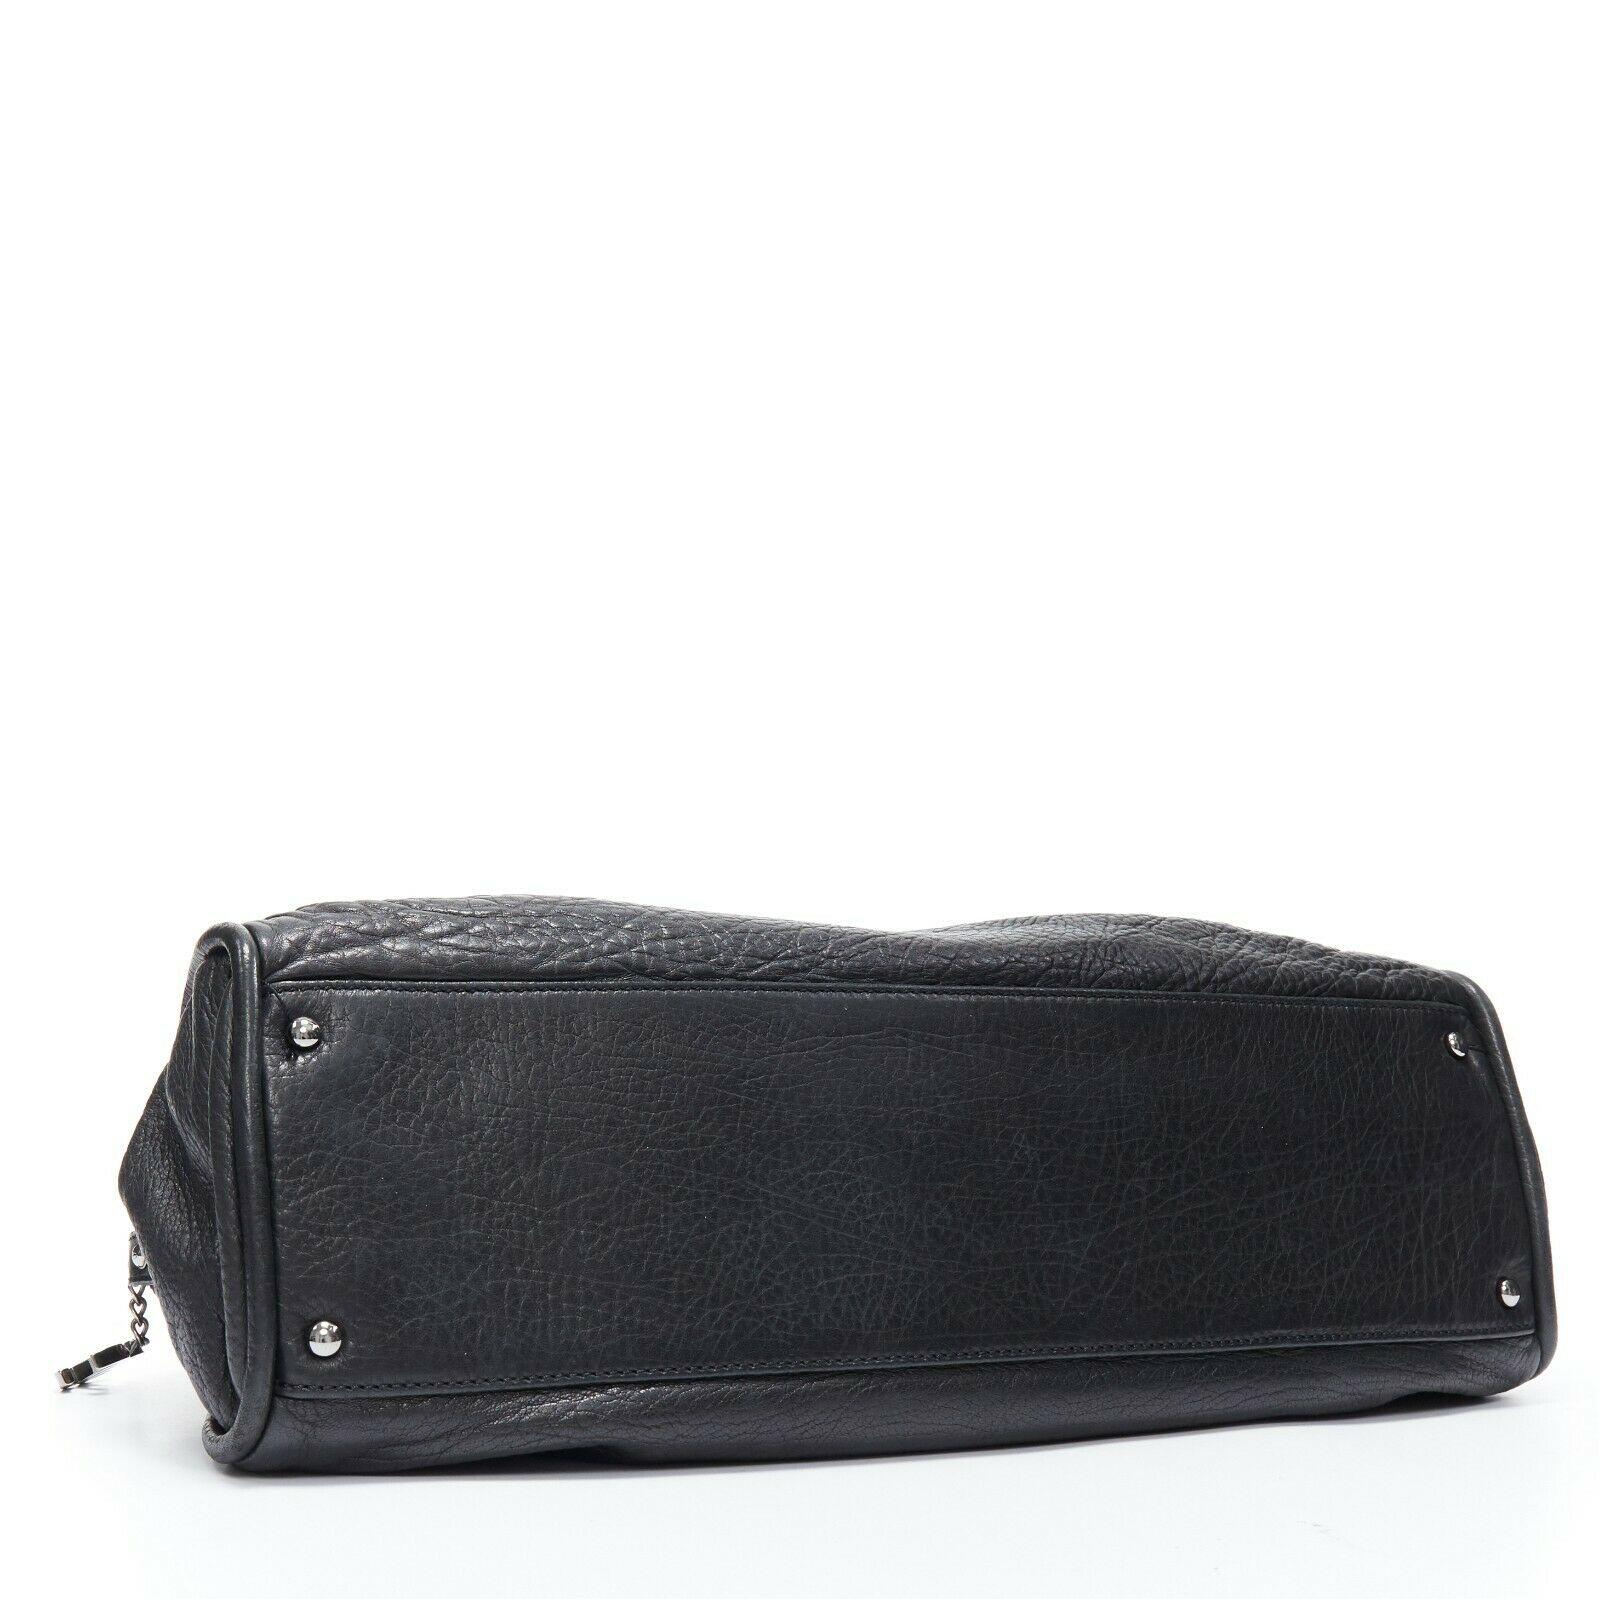 Black CHANEL black diamond quilted pebbled leather 2.55 braid strap shoulder bag